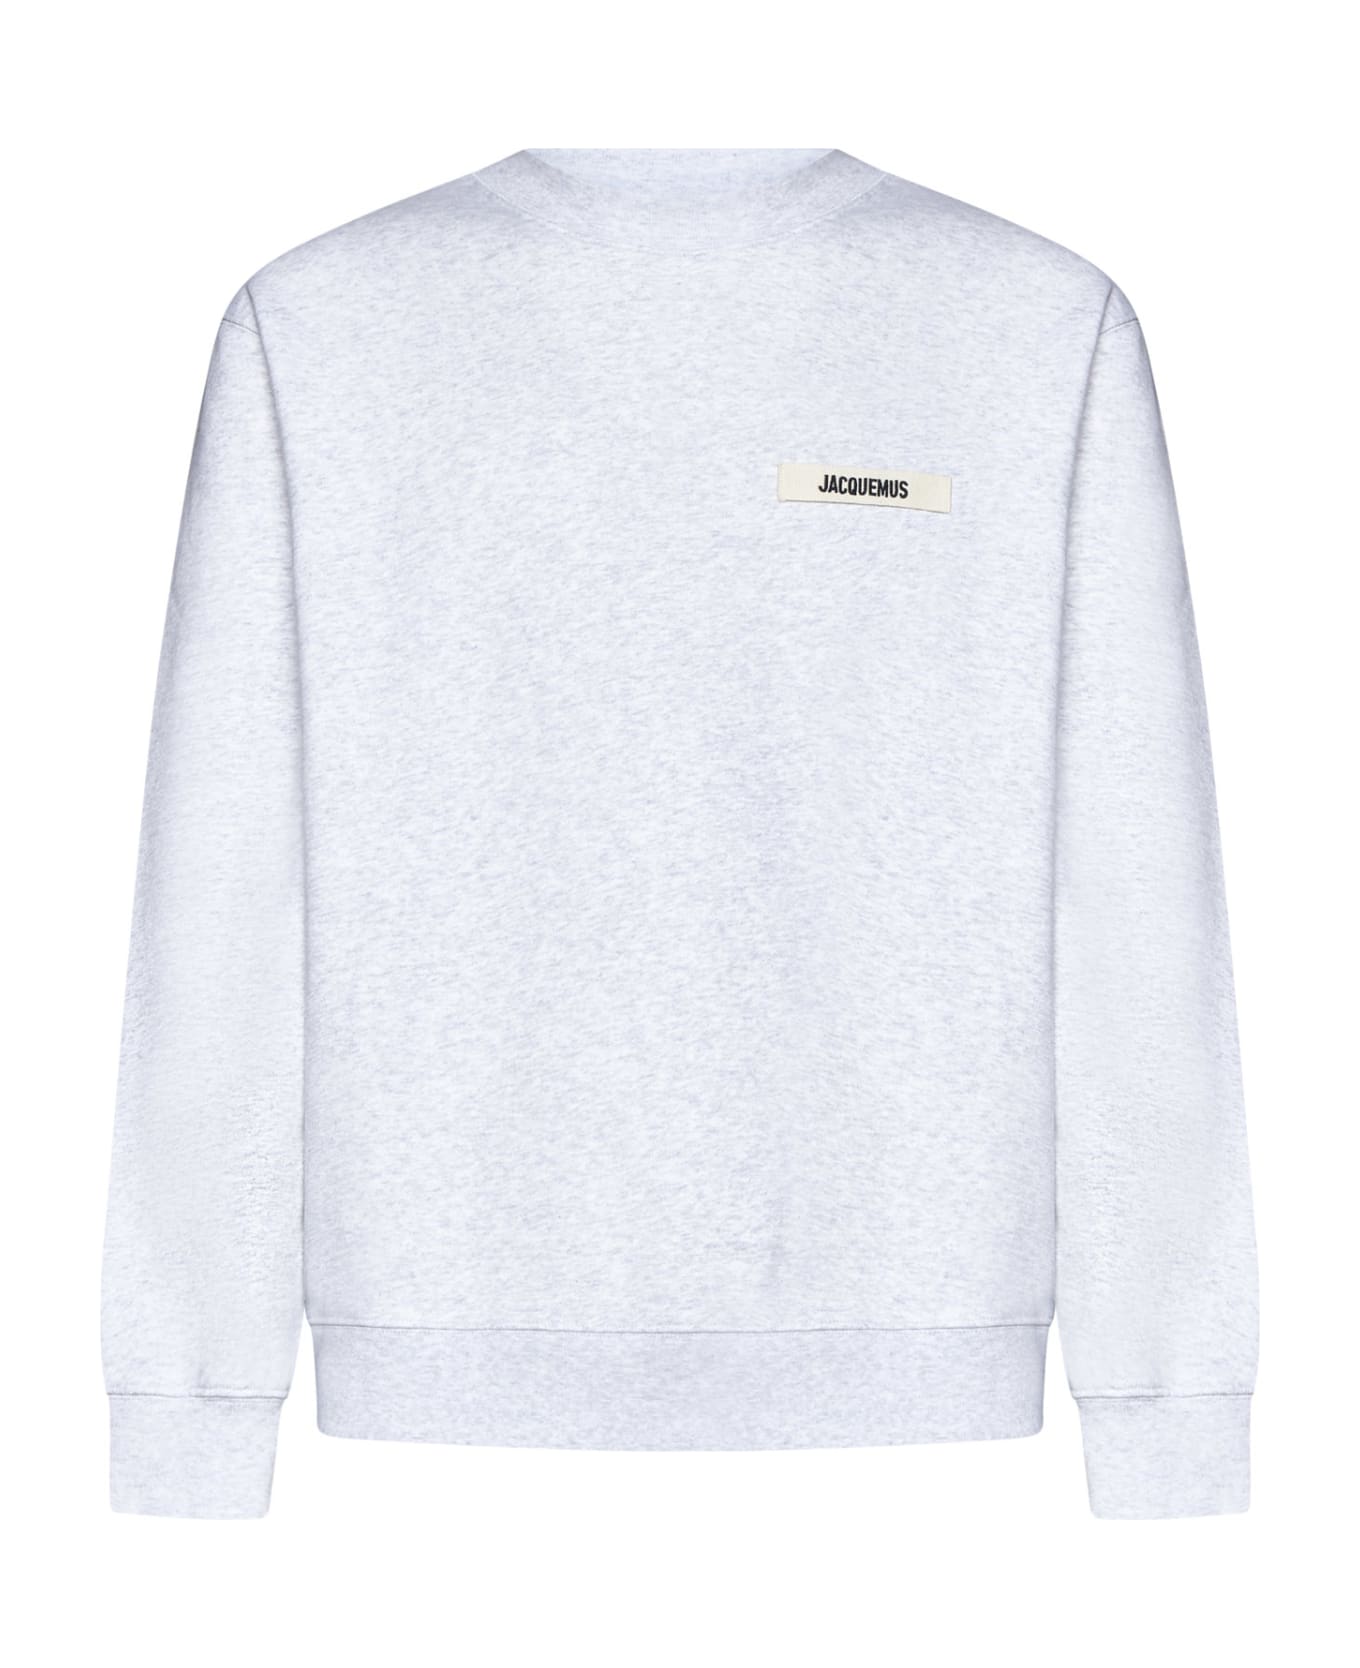 Jacquemus Sweater - Grey